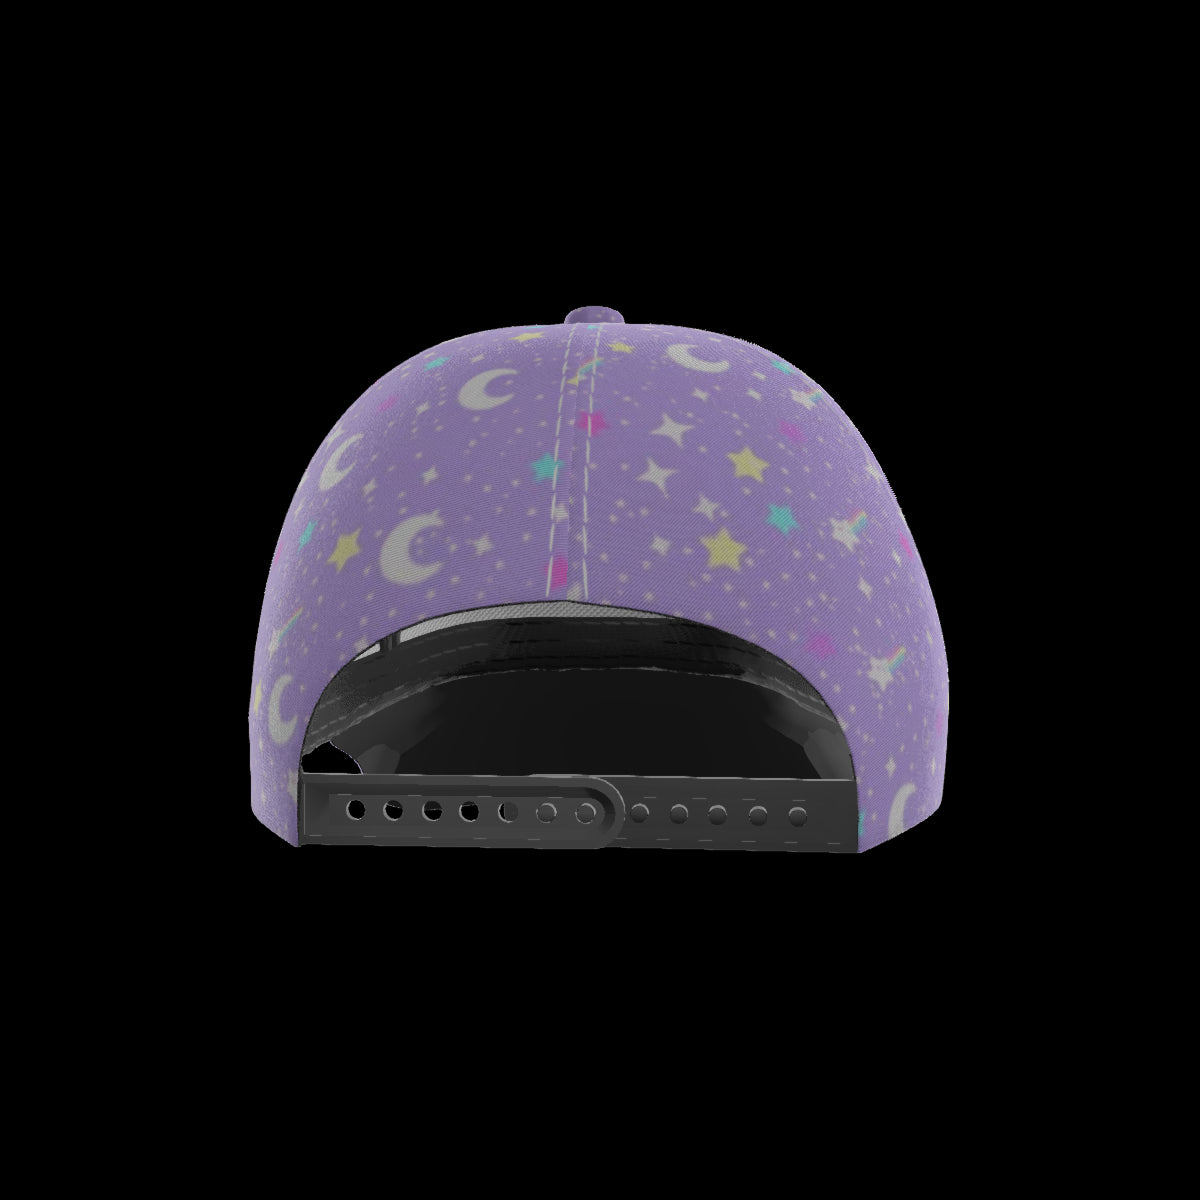 Starry Glitter Purple Peaked Cap